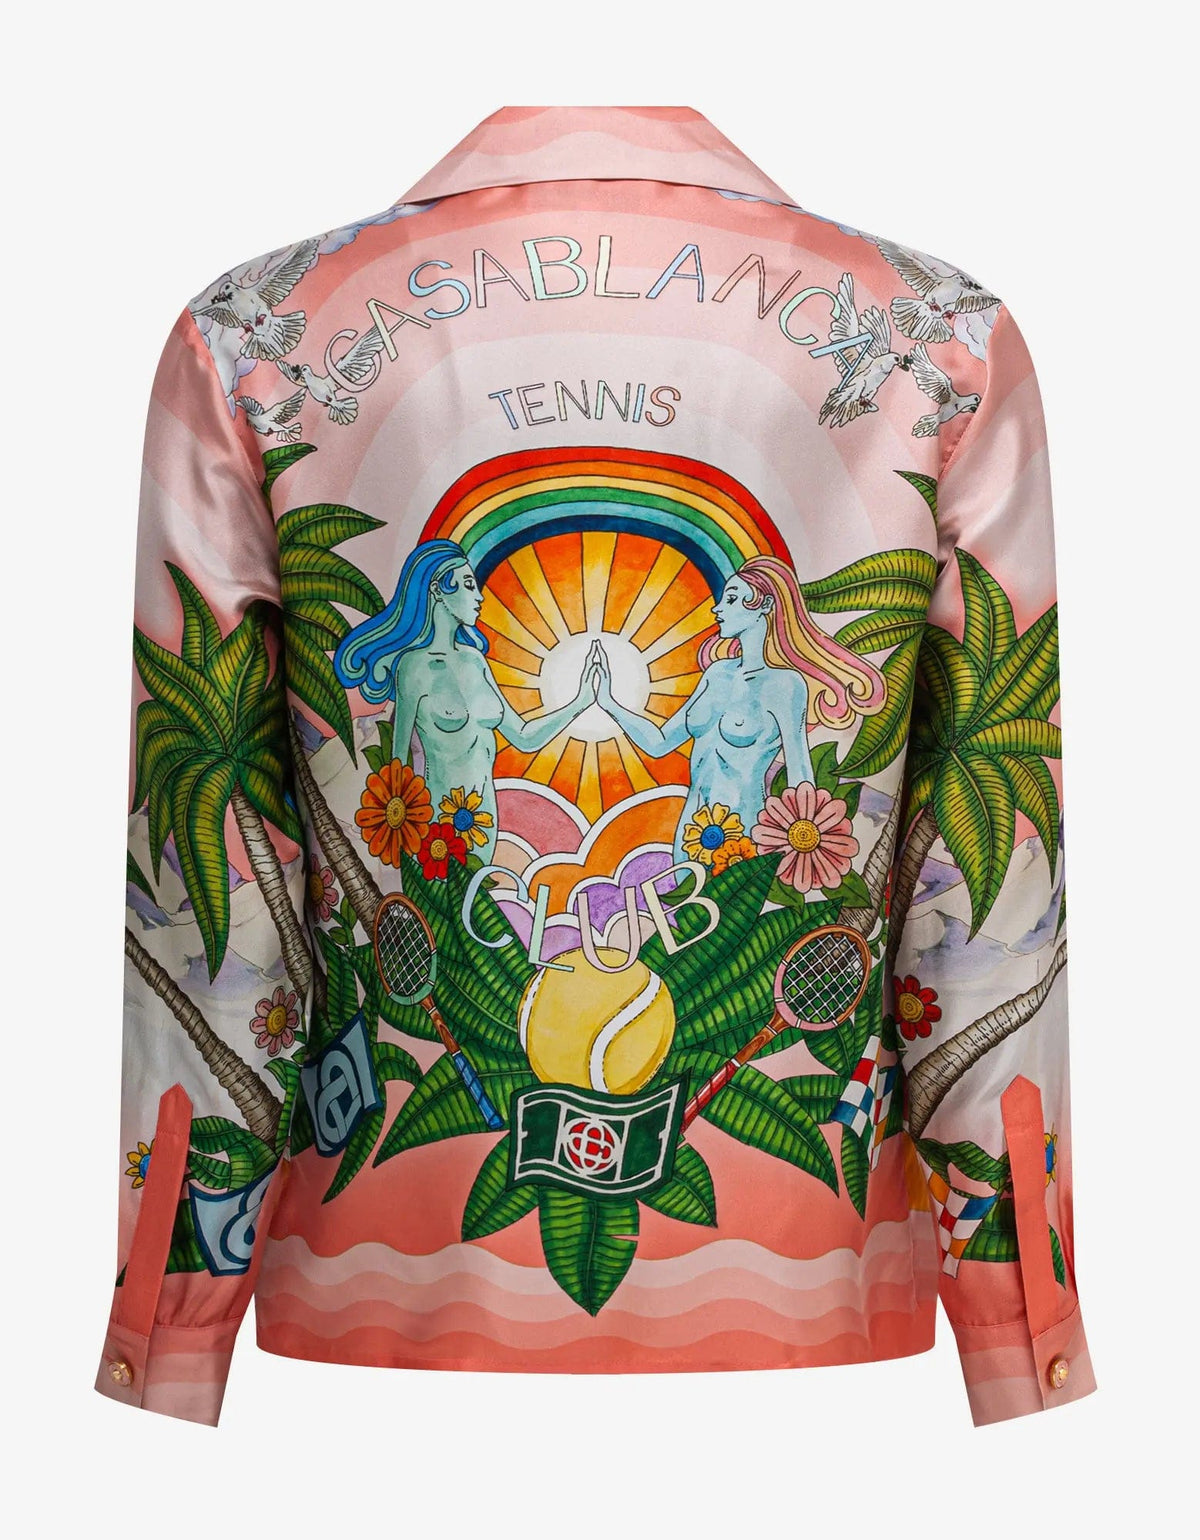 Casablanca Paix Et Amour Tennis Club Silk Shirt